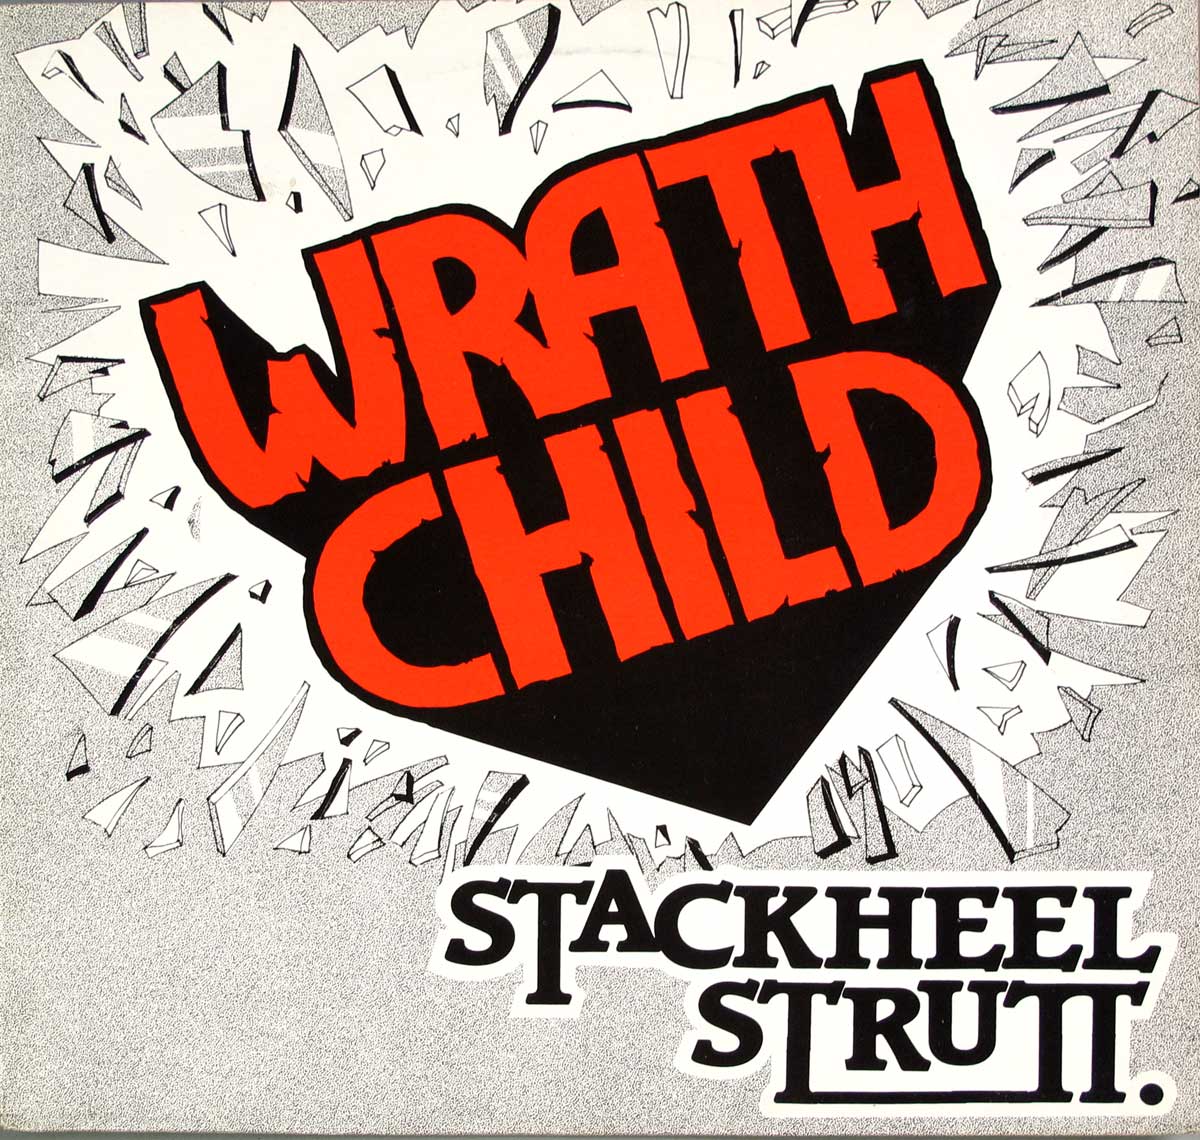 High Quality Photo of Album Front Cover  "WRATHCHILD - Stackheel Strutt"